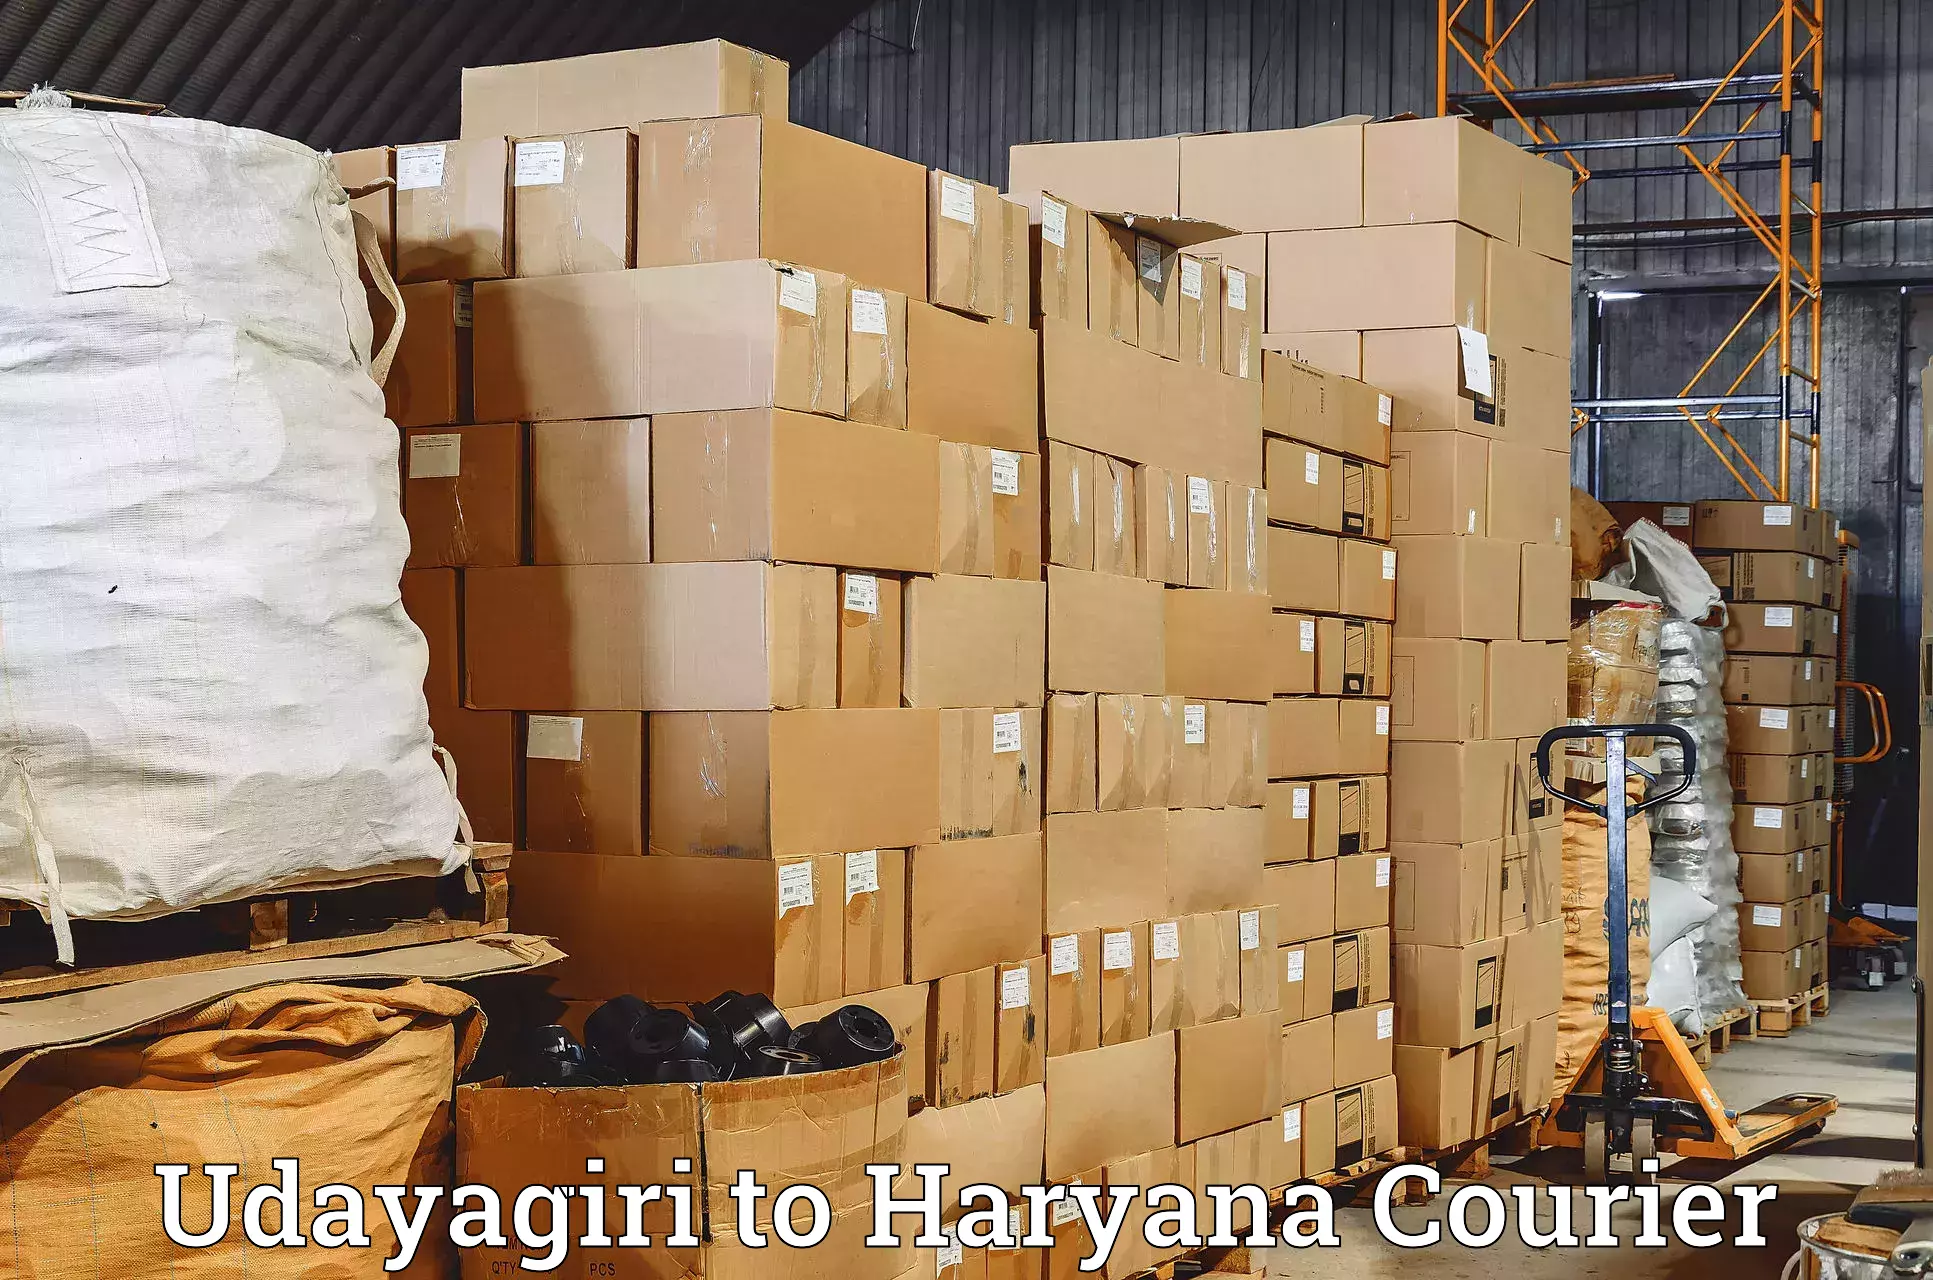 Global logistics network Udayagiri to Haryana